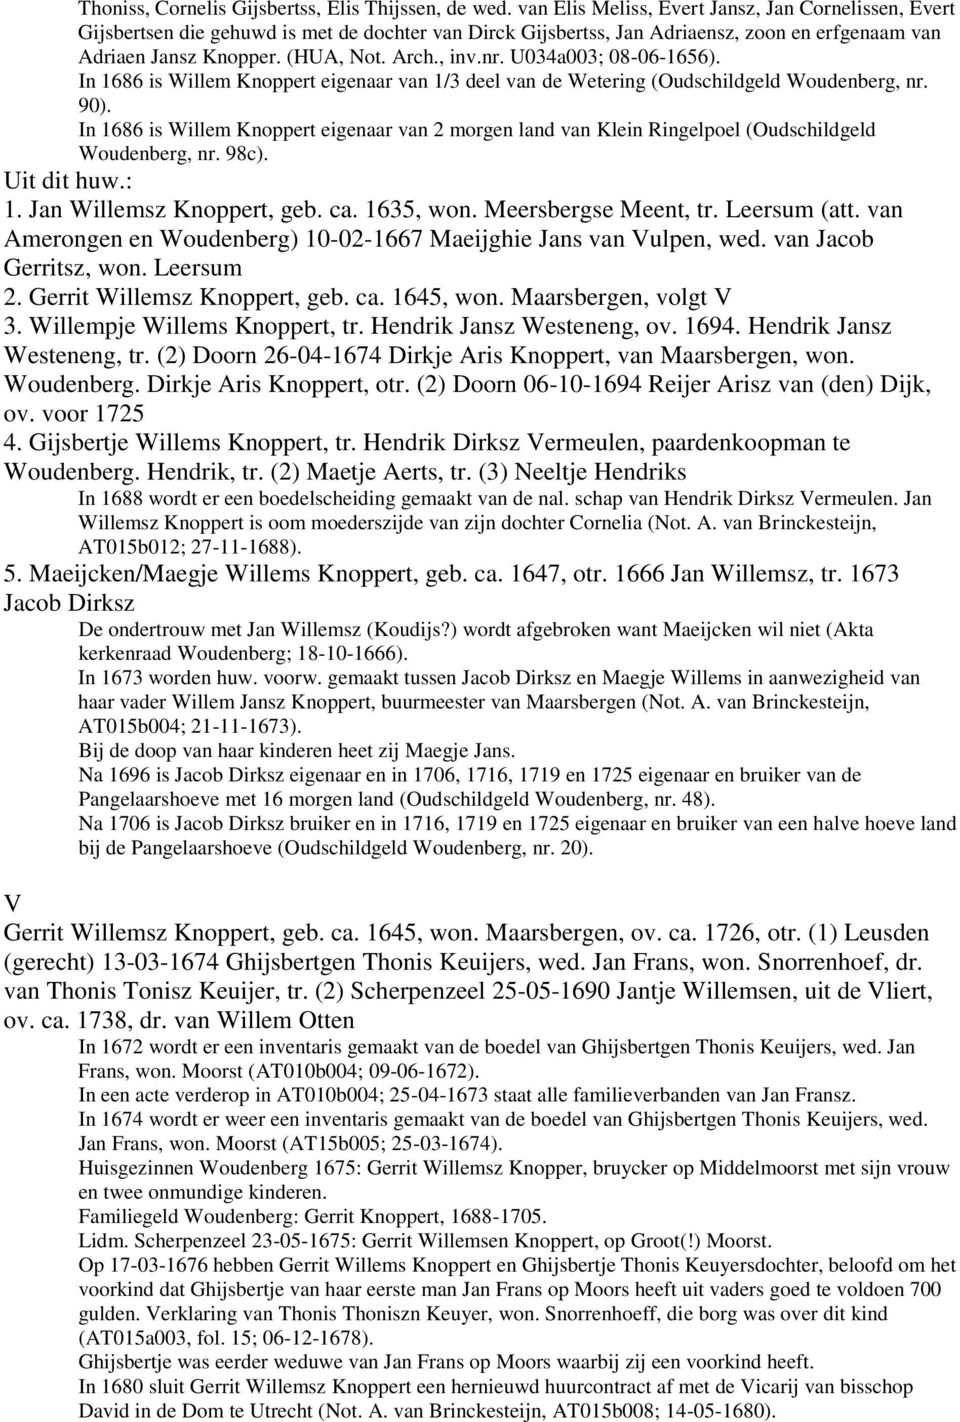 nr. U034a003; 08-06-1656). In 1686 is Willem Knoppert eigenaar van 1/3 deel van de Wetering (Oudschildgeld Woudenberg, nr. 90).